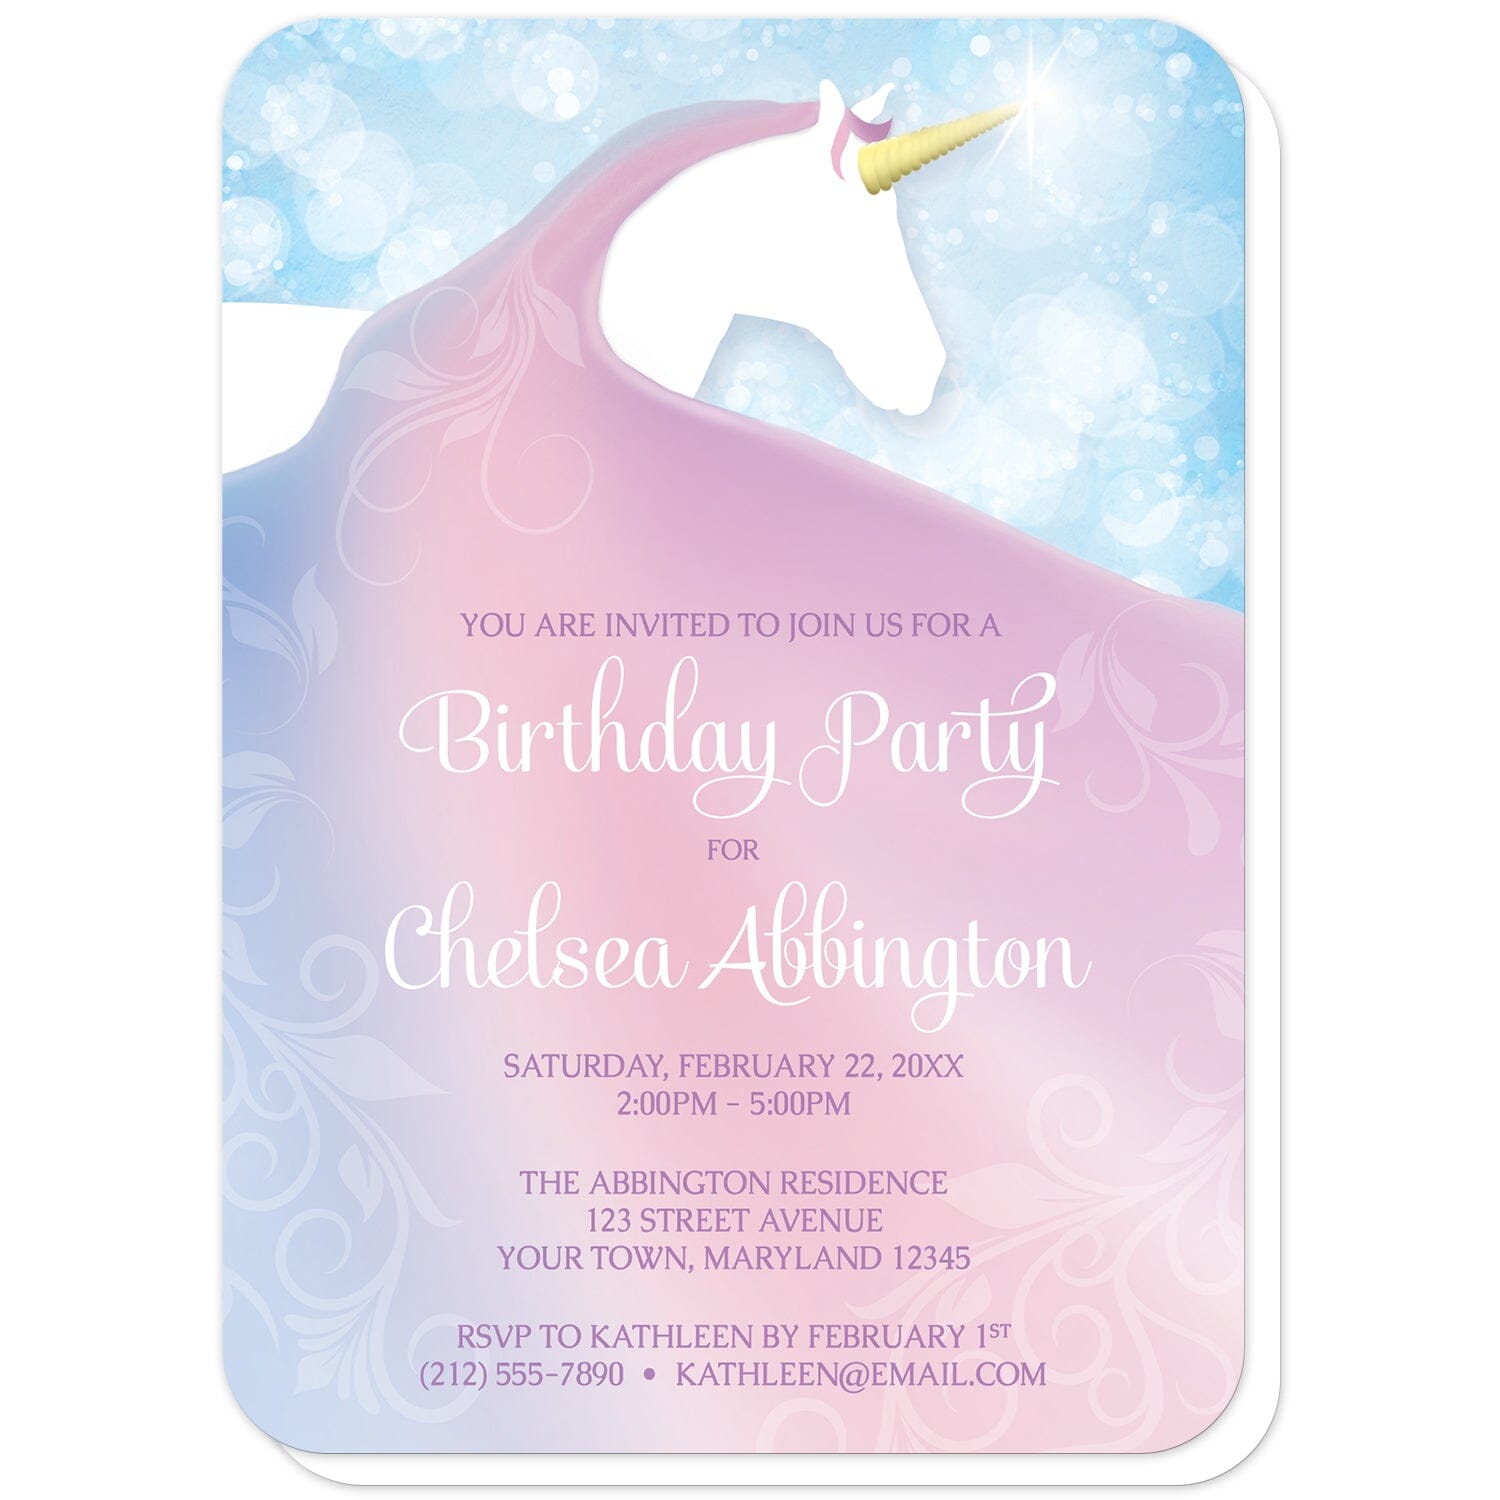 Free Unicorn birthday invitation to print or send online